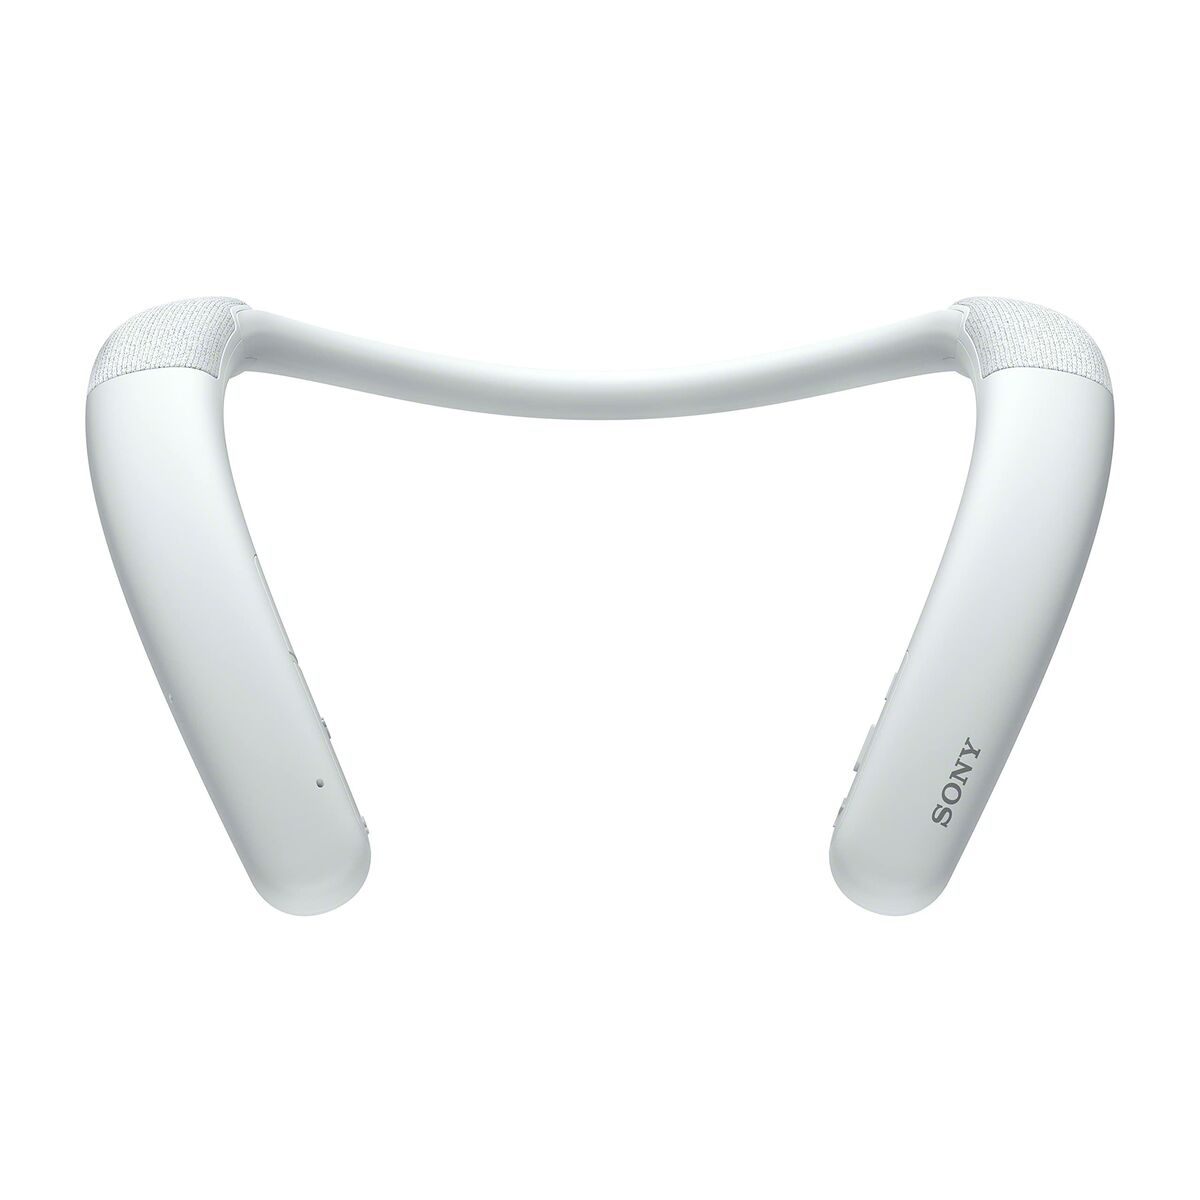 Altavoces Bluetooth Sony Srs-nb10 - blanco - 